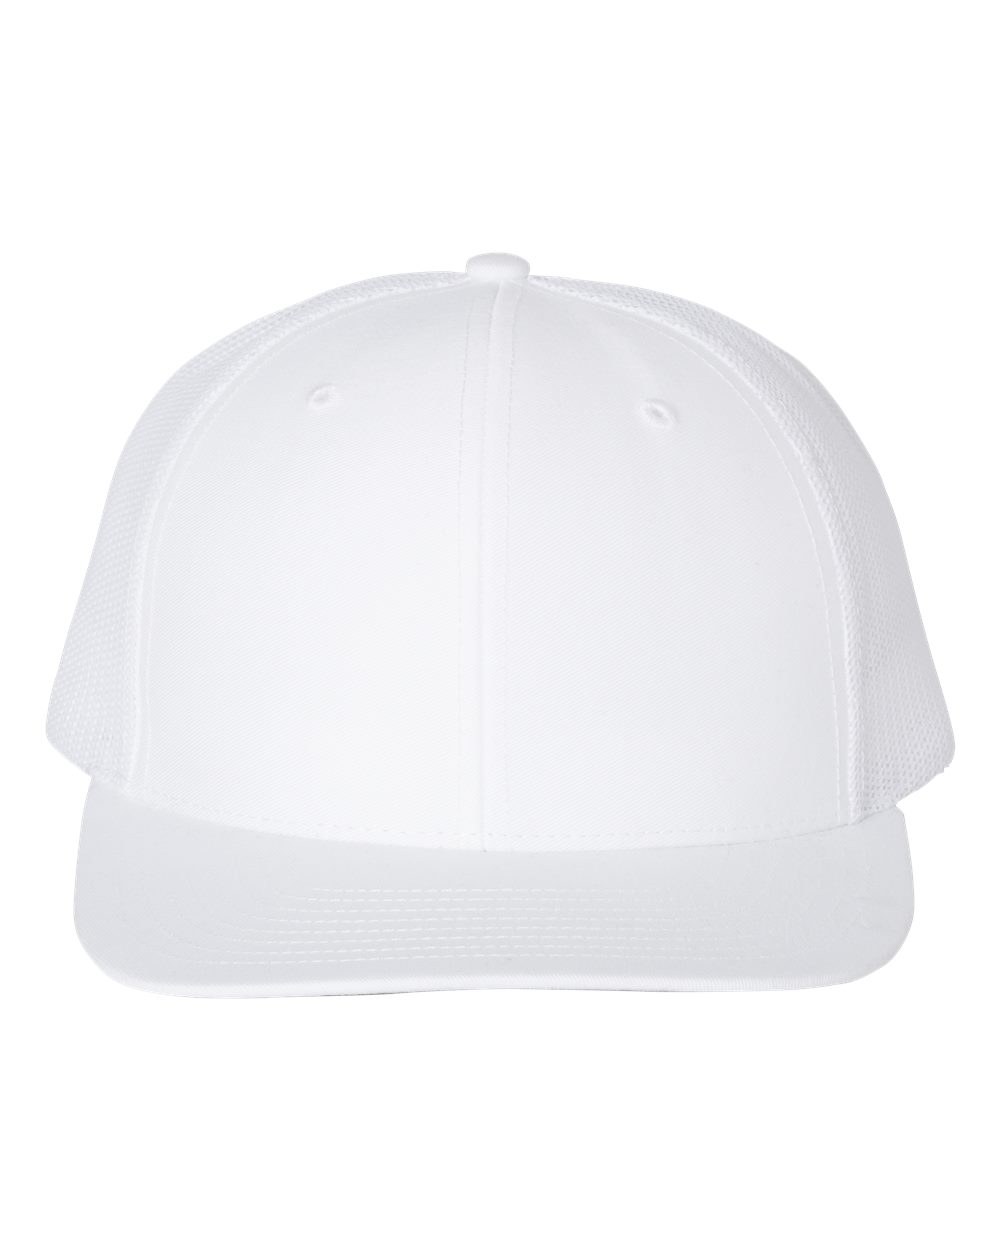 New 2020 MIDWEST ARCHERY Hat Cap Adjustable Snapback RICHARDSON 112 BLACK LOGO 